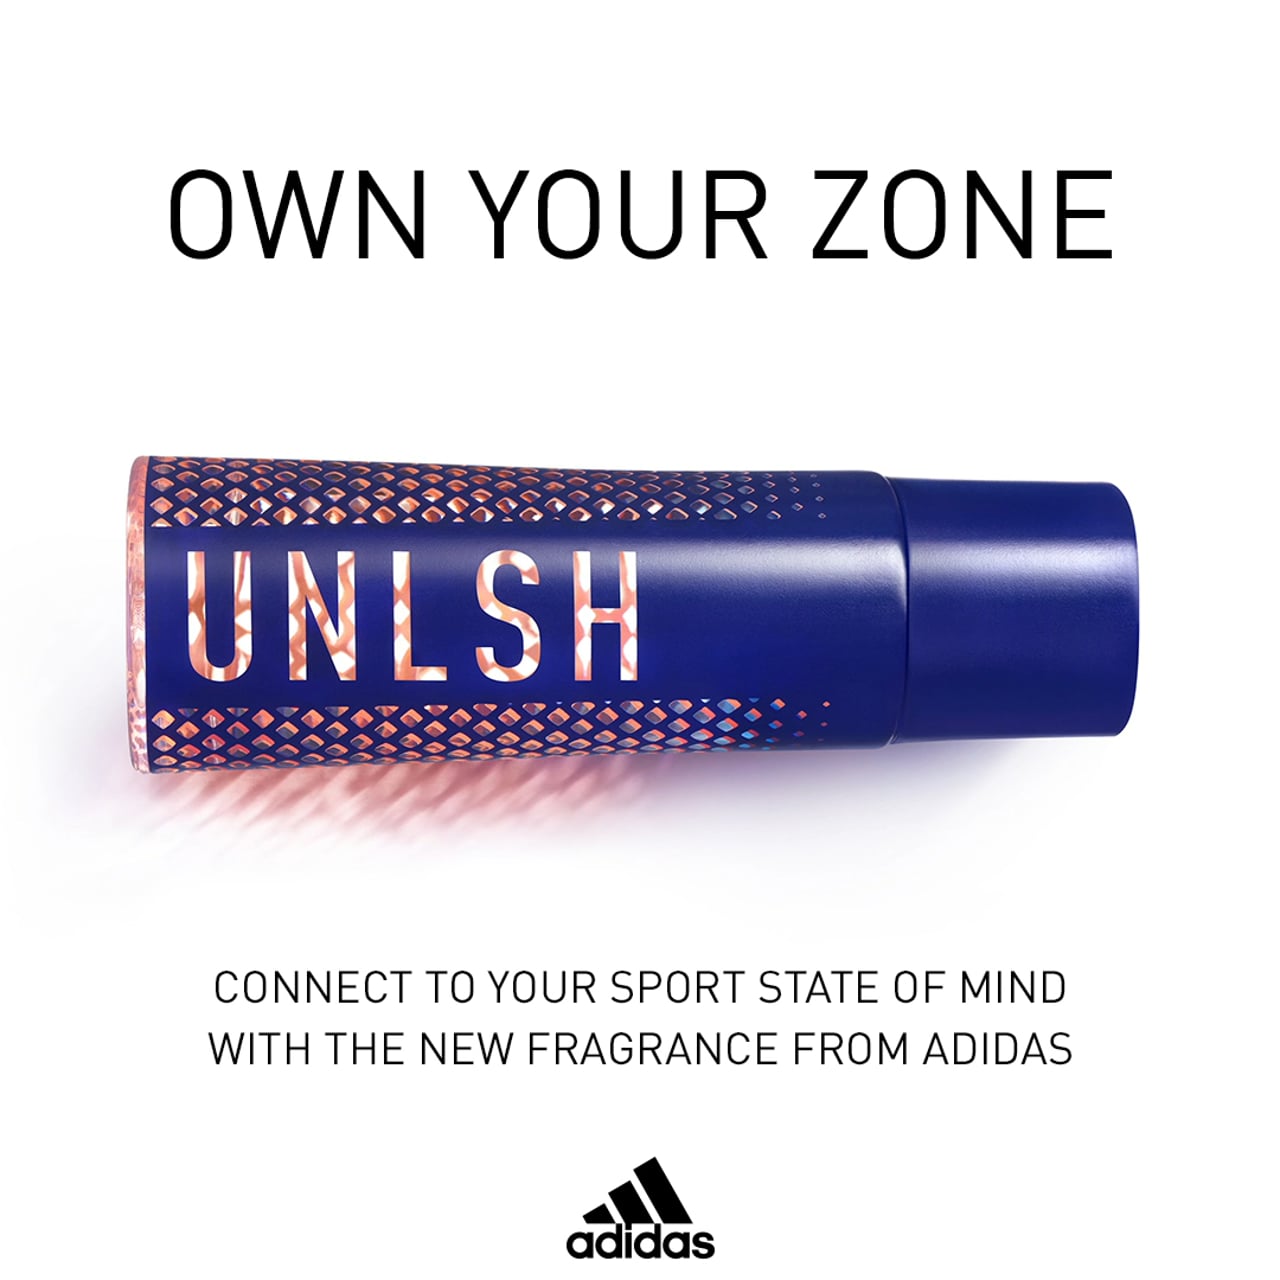 Adidas - UNLSH banner (1.1)